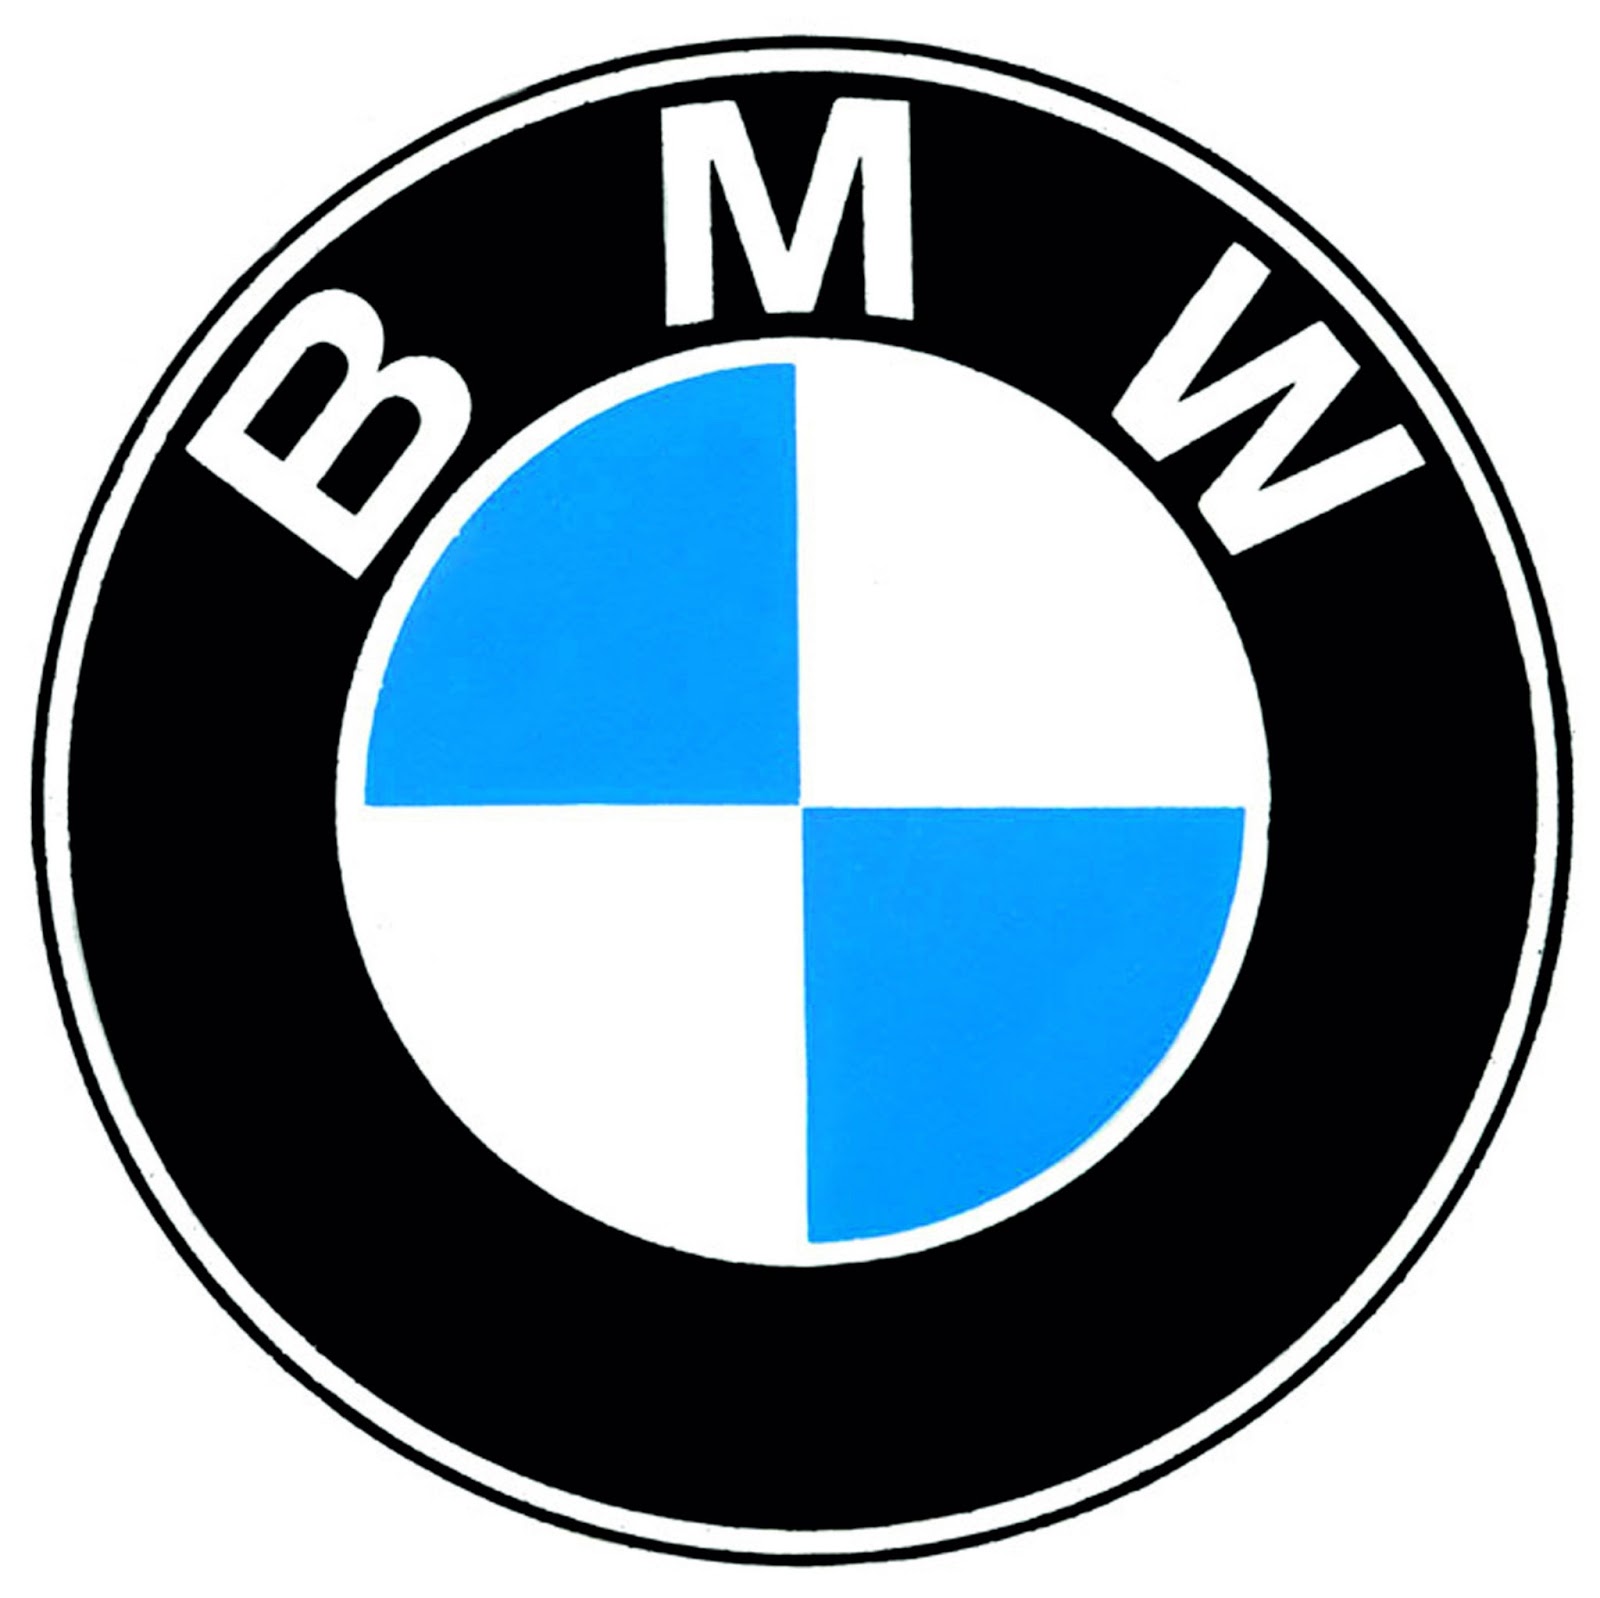 History the bmw logo #6